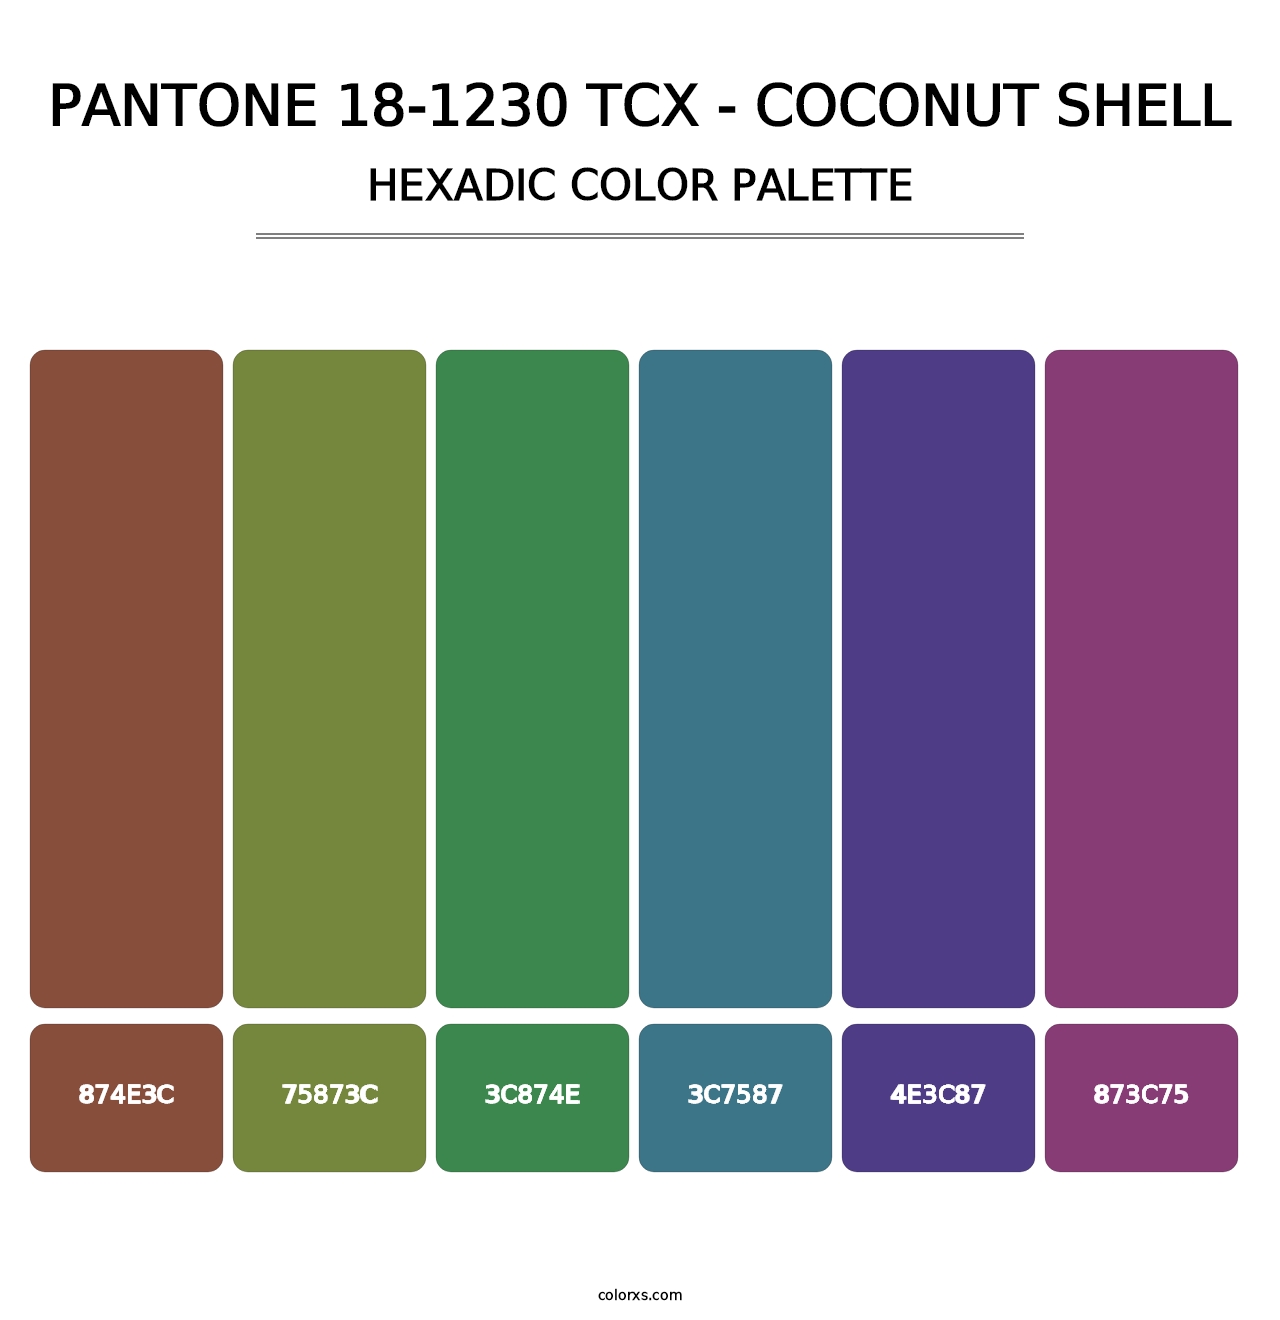 PANTONE 18-1230 TCX - Coconut Shell - Hexadic Color Palette